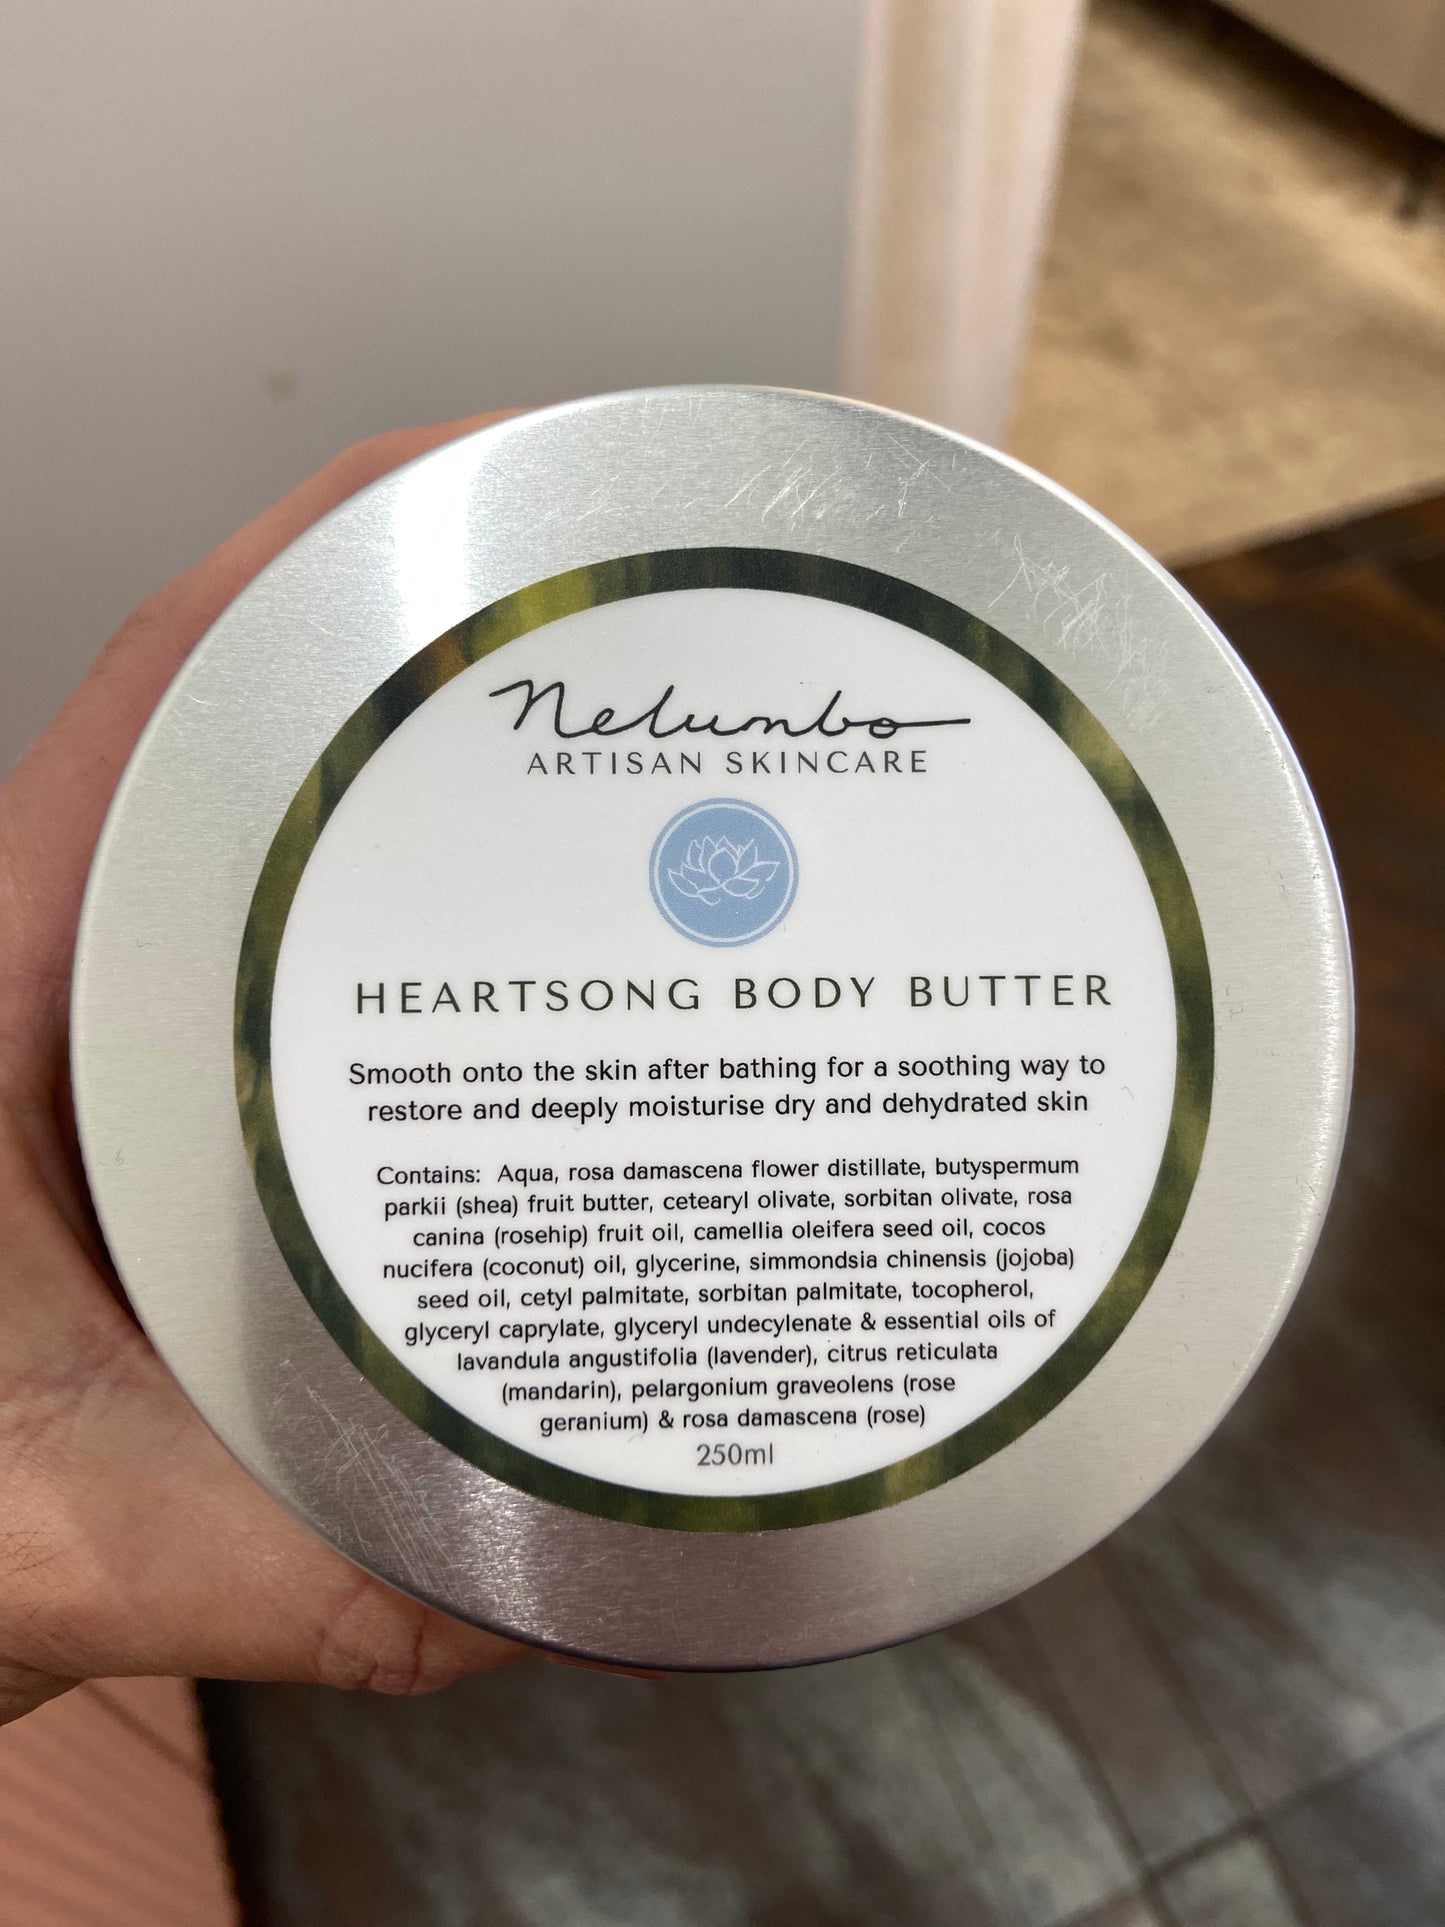 Nelumbo Artisan Skincare - Heartsong Body Butter 250ml - The Bare Theory